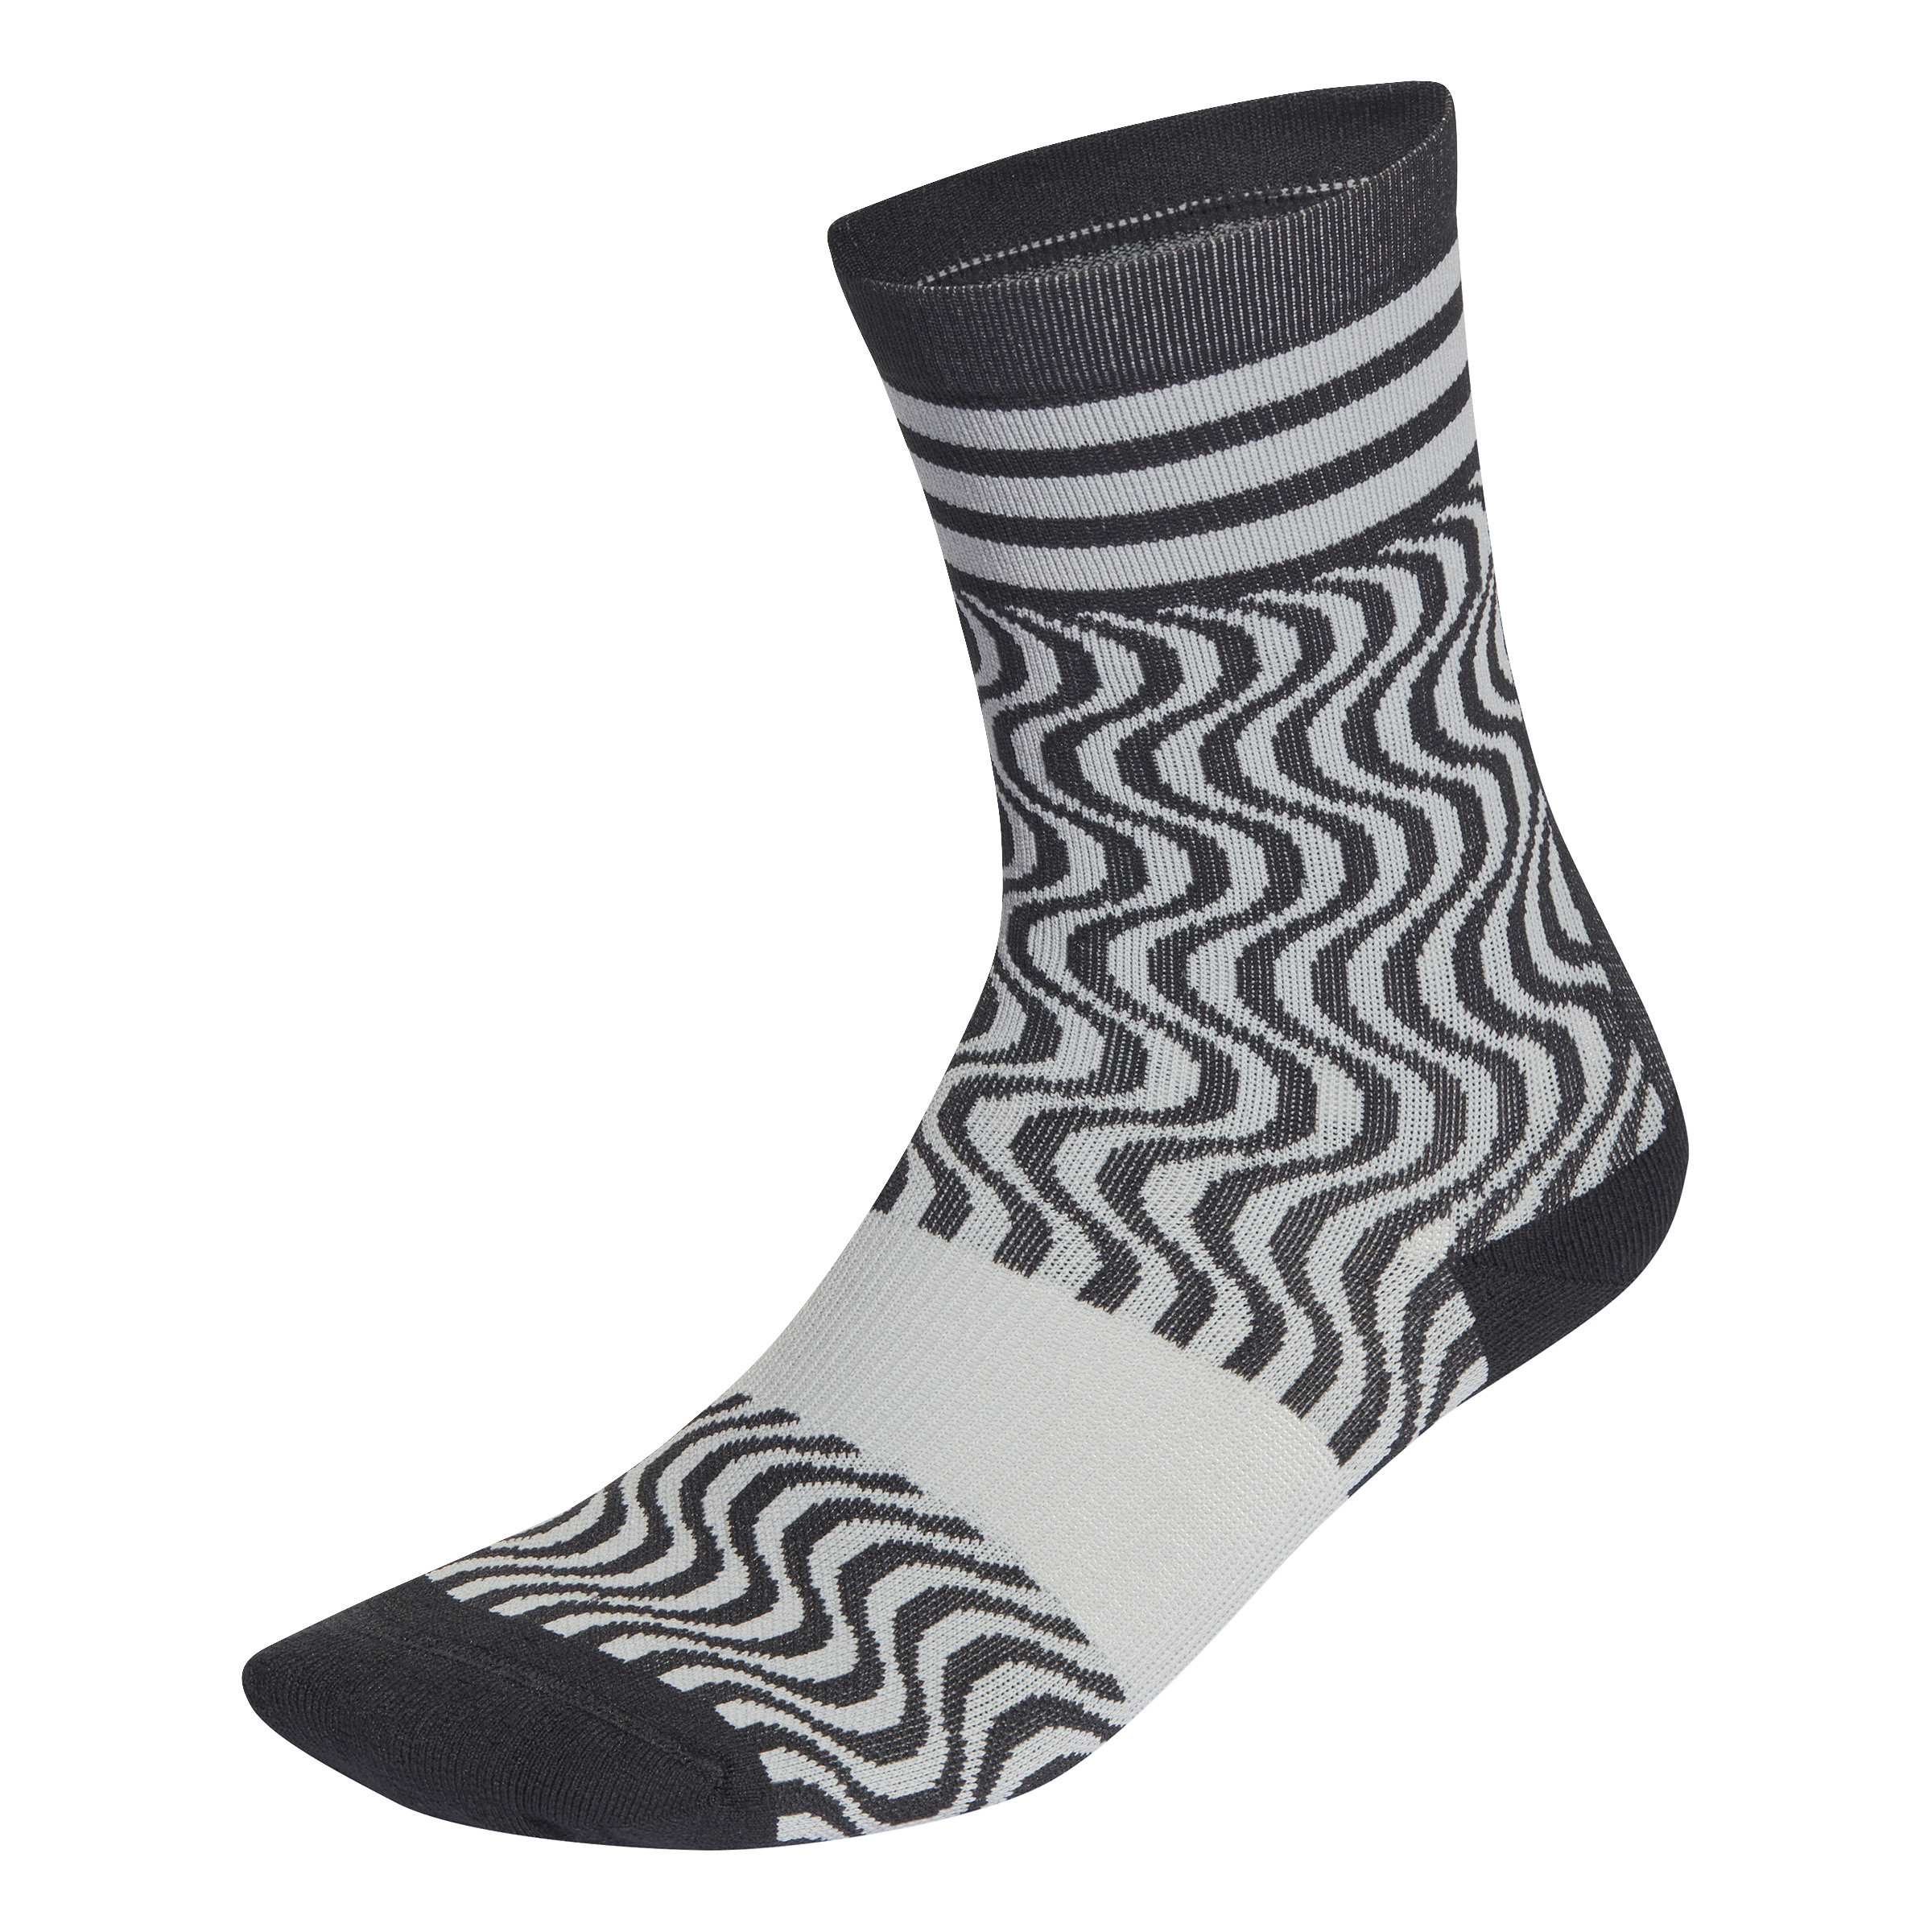 Adidas by Stella McCartney - Logo socks, Black, large image number 0